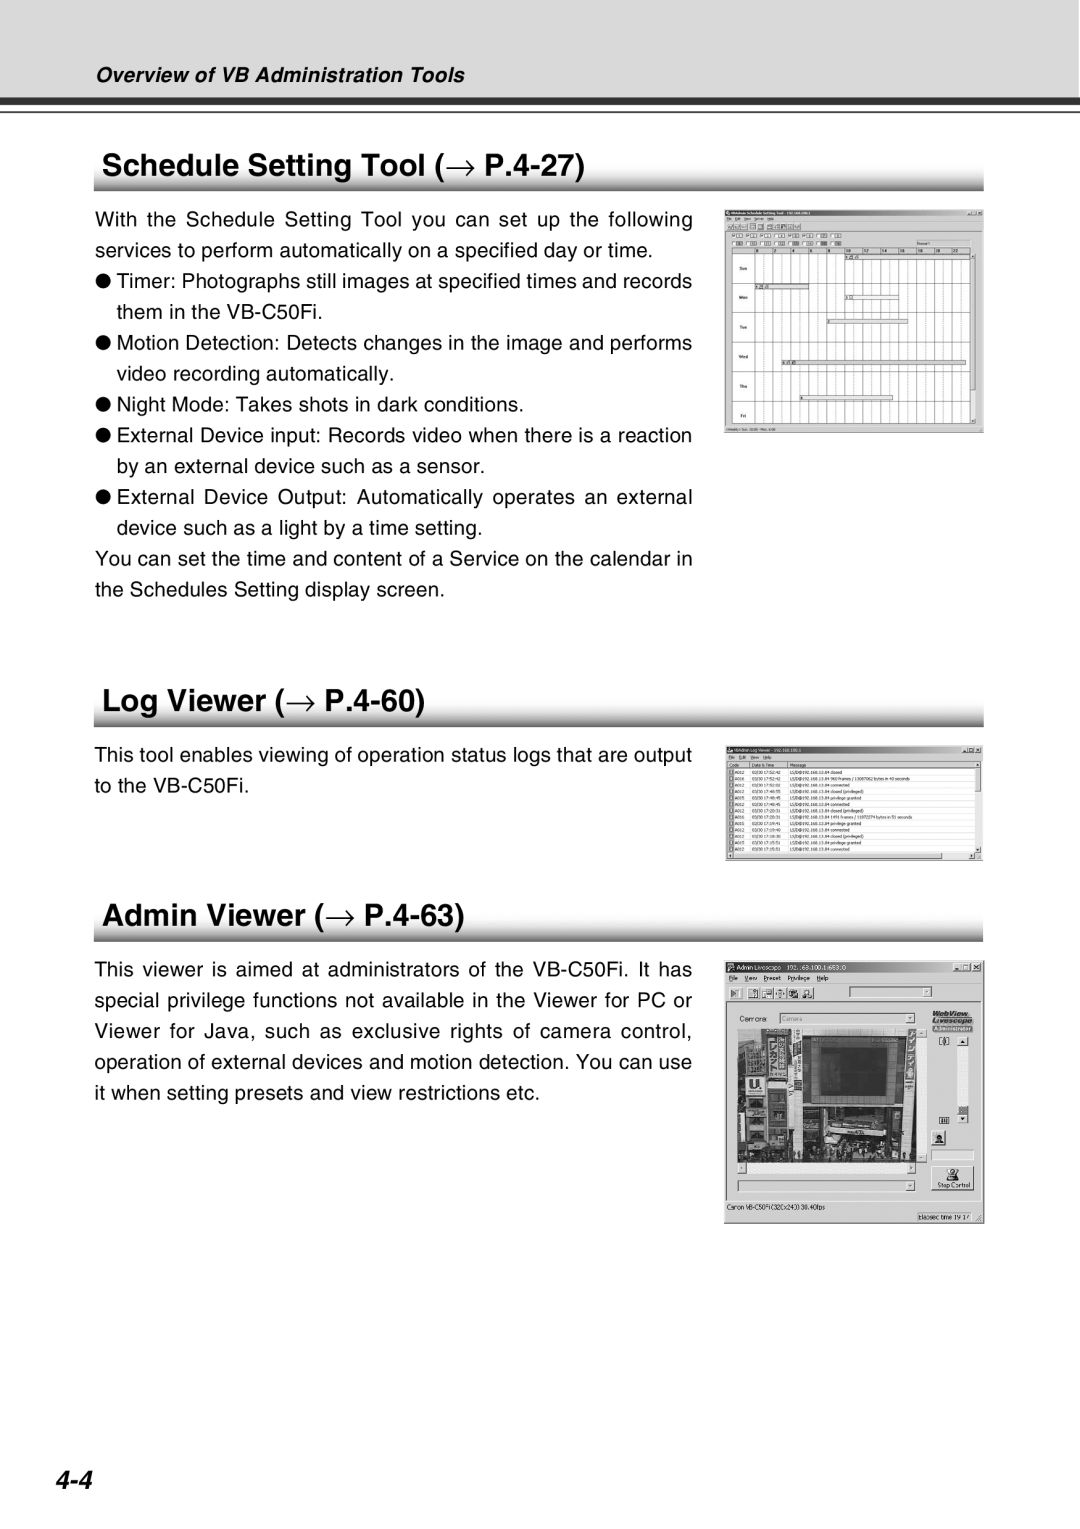 Canon Vb-C50fi user manual Schedule Setting Tool → P.4-27, Log Viewer → P.4-60, Admin Viewer → P.4-63 